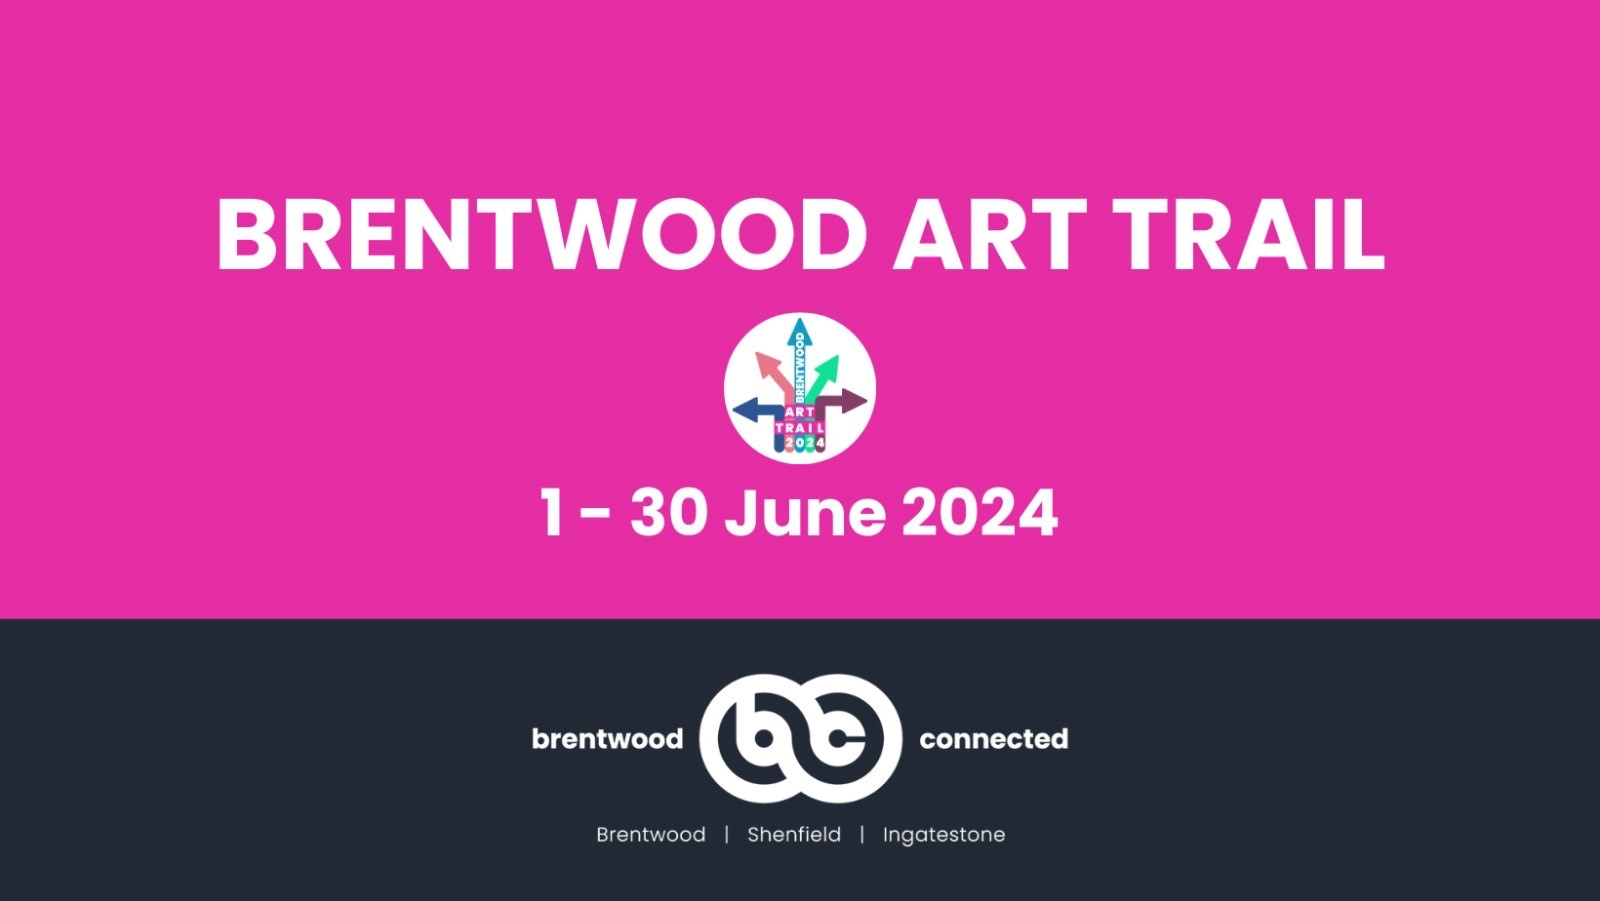 Brentwood Art Trail 2024 header image